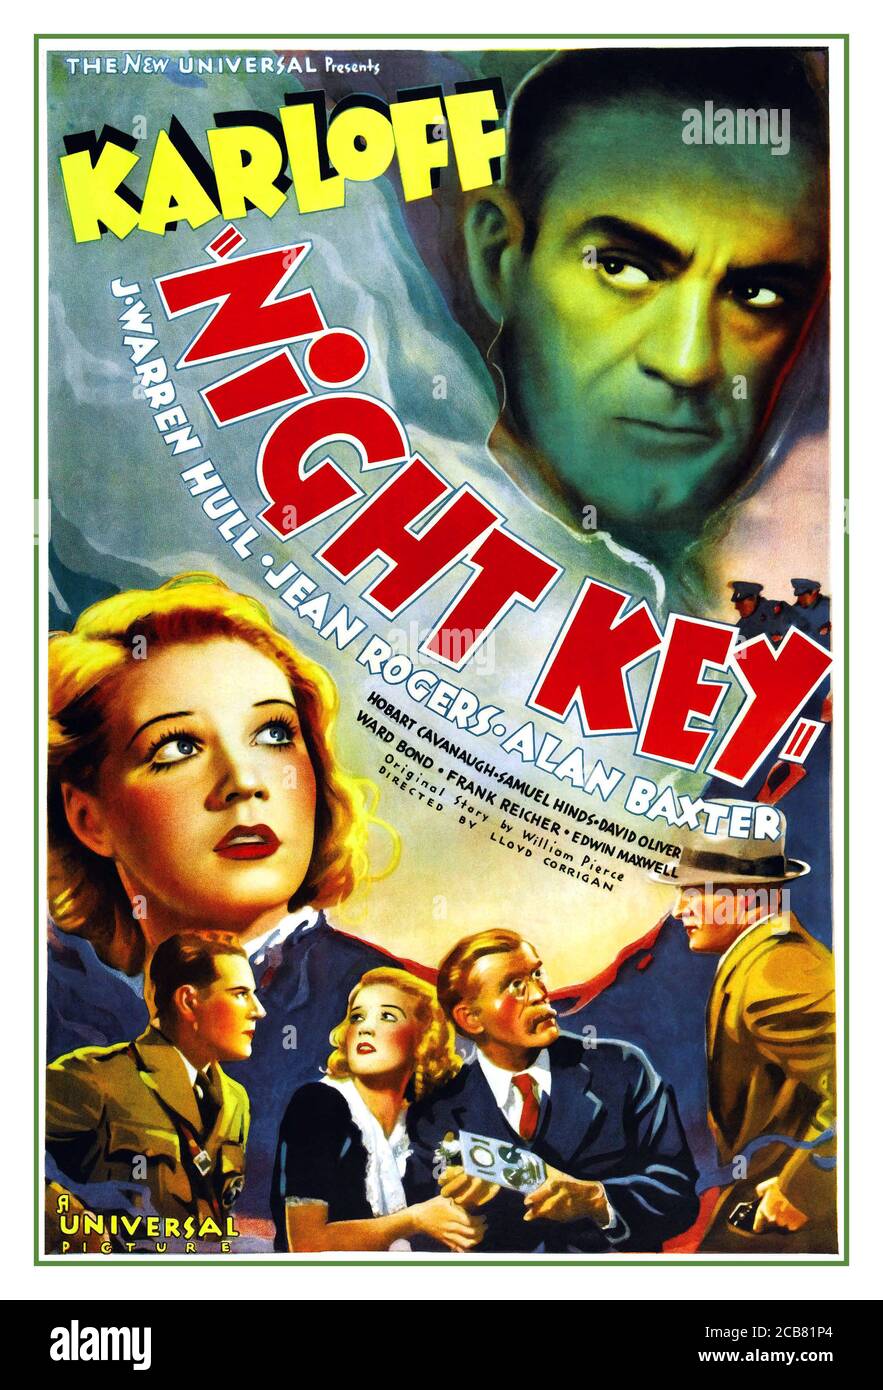 BORIS KARLOFF Vintage 1930er Jahre Film Kino Poster 'THE NIGHT KEY', mit Boris Karloff, mit Jean Rogers, Warren Hull und Alan Baxter Film Kino Poster 1937 The New Universal Studios Stockfoto